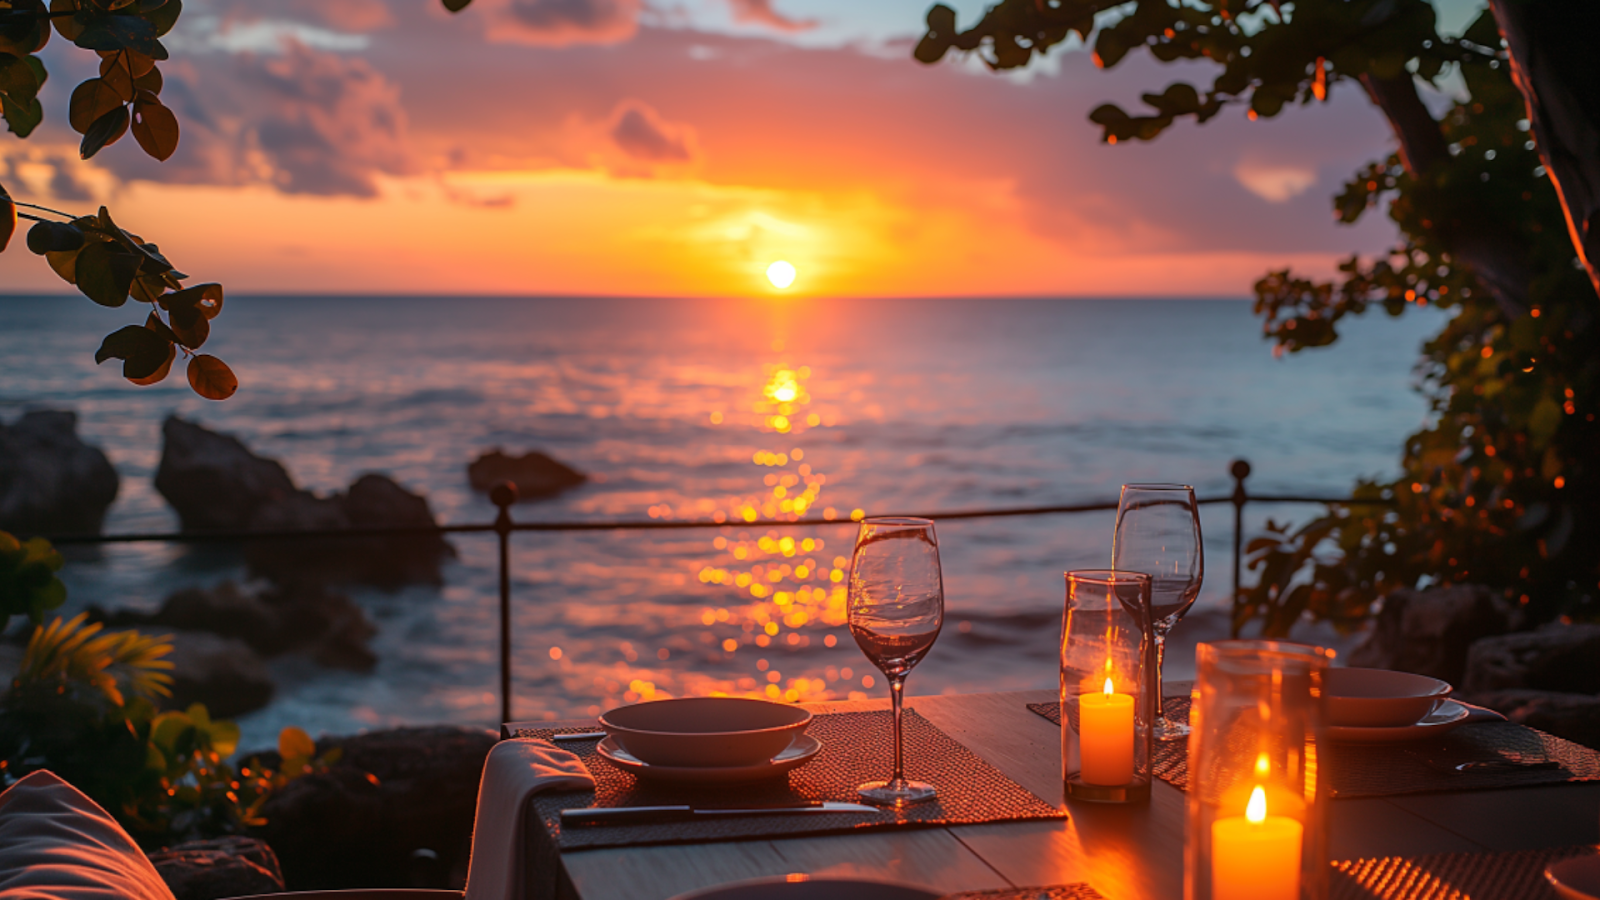 An elegant outdoor dining setup in Playa del Carmen, with ocean views at sunset.